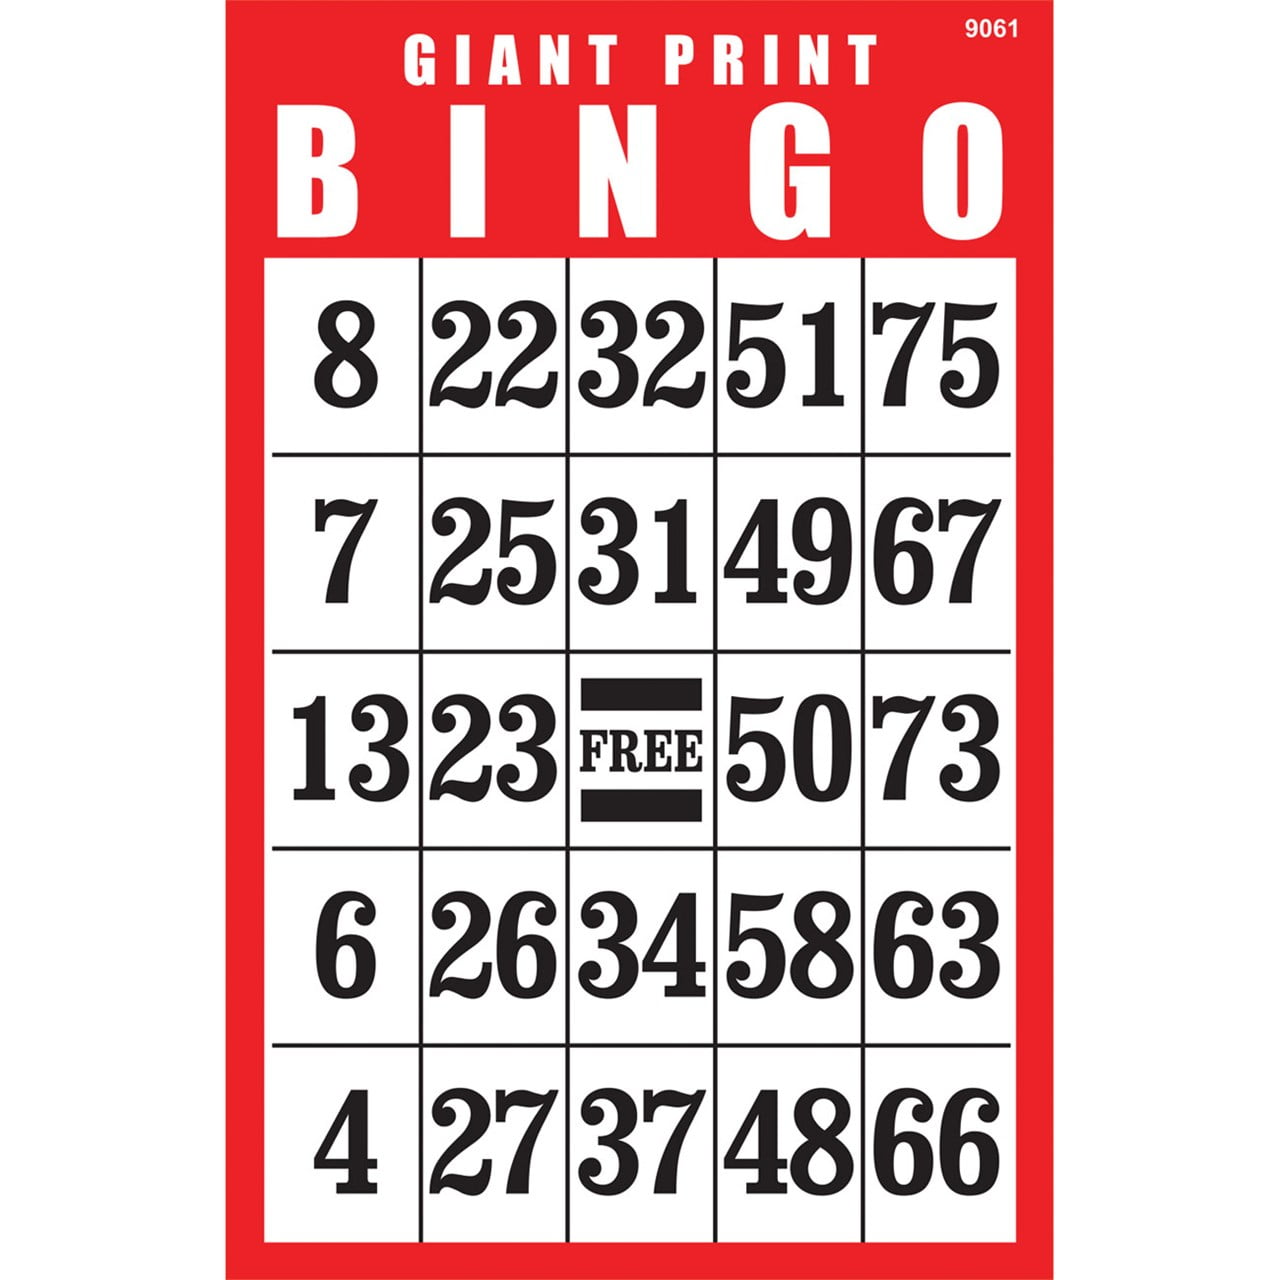 giant-print-bingo-card-red-walmart